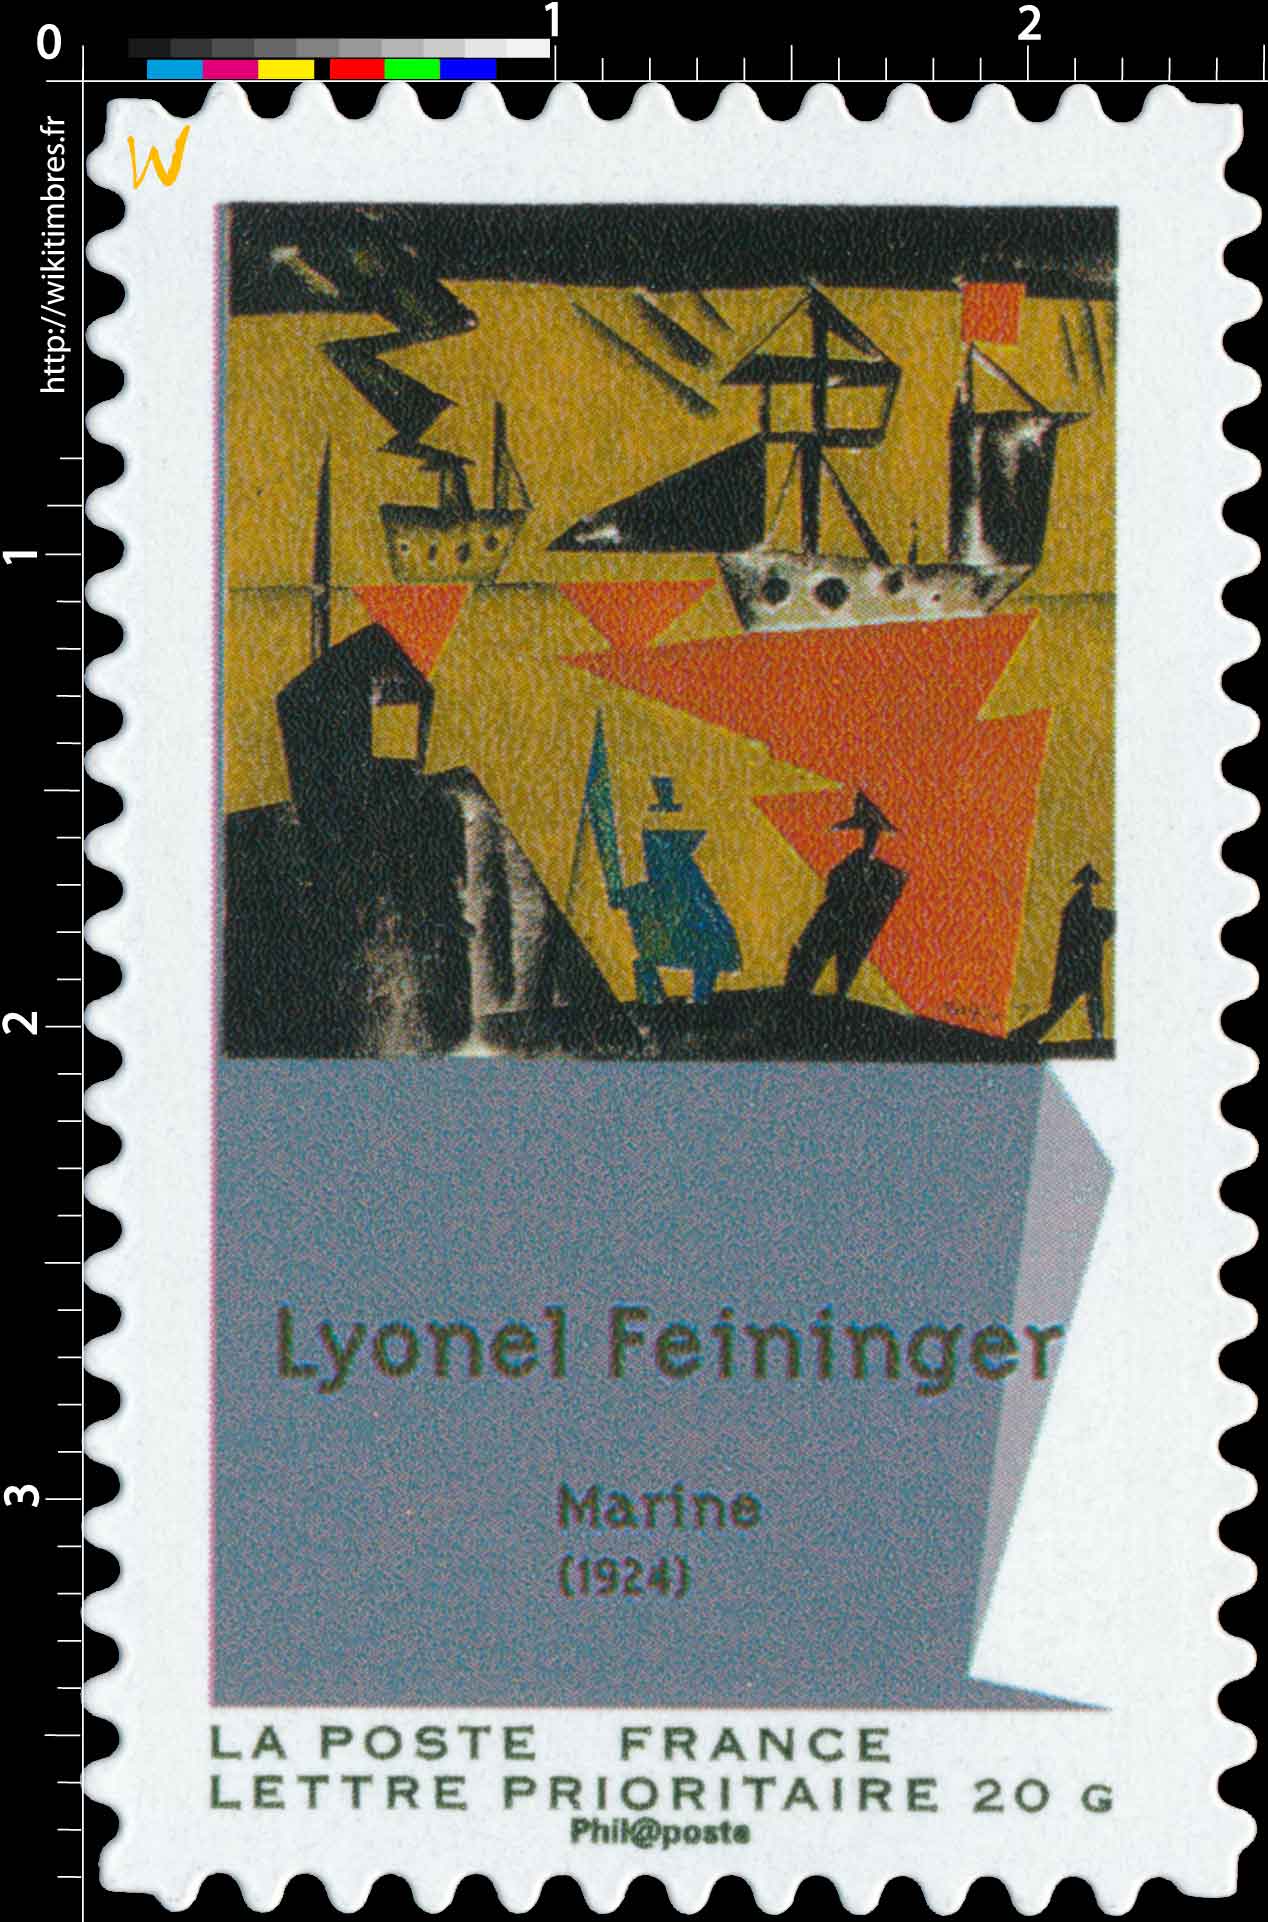 Lyonel Feininger Marine (1924)